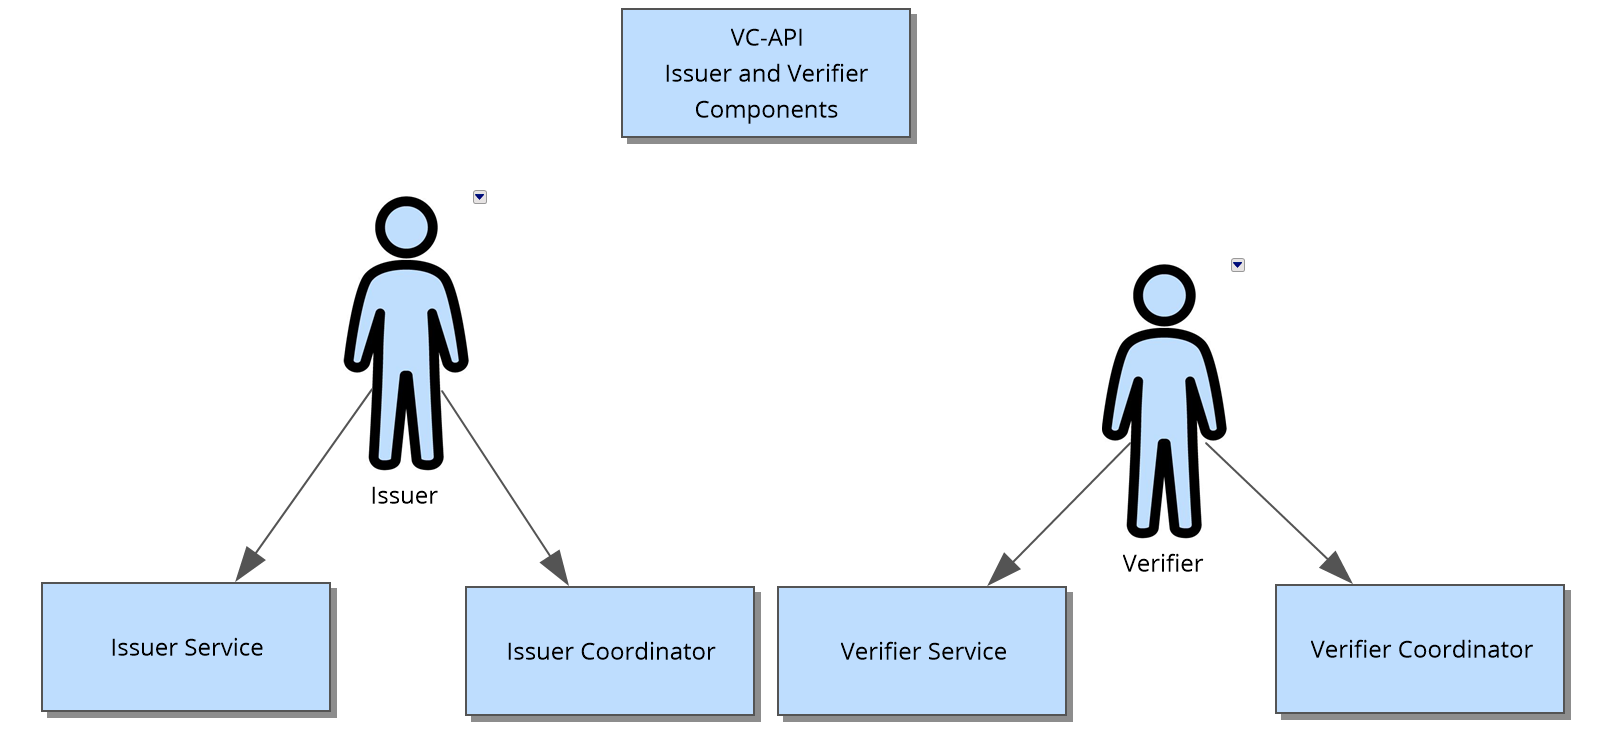 VC-API Role Components